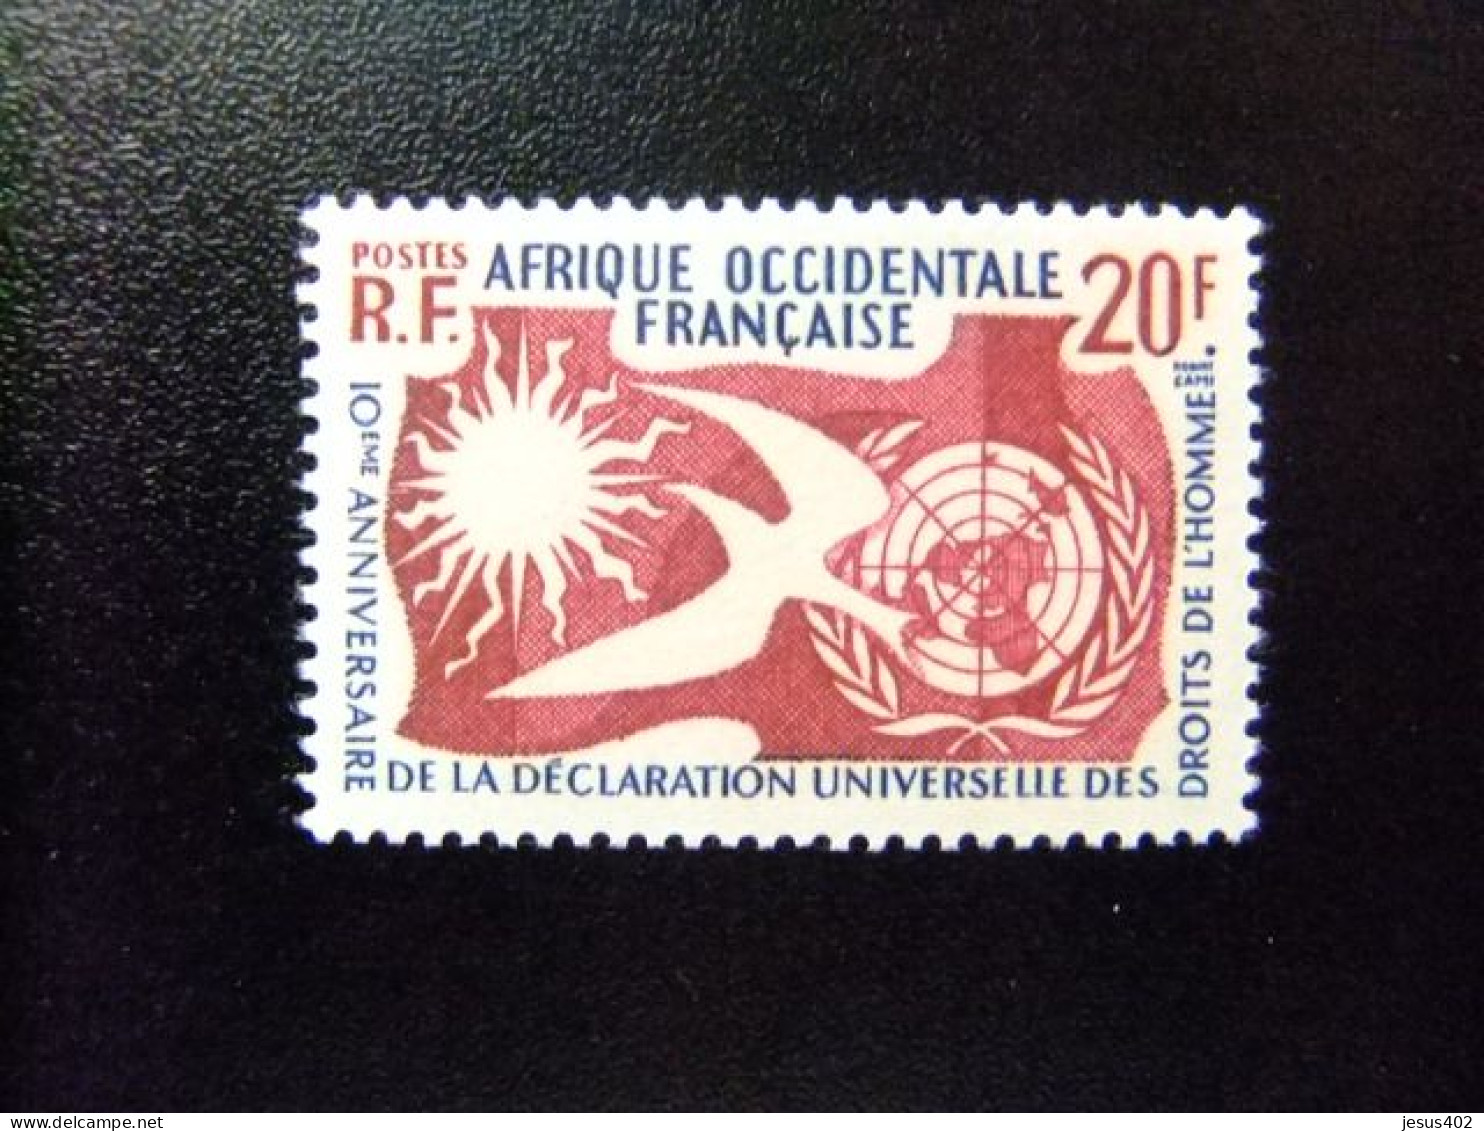 56 AFRIQUE OCCIDENTALE FRANCAISE (A.O.F.) 1958 / O.N.U. / YVERT 74 MNH - Nuovi